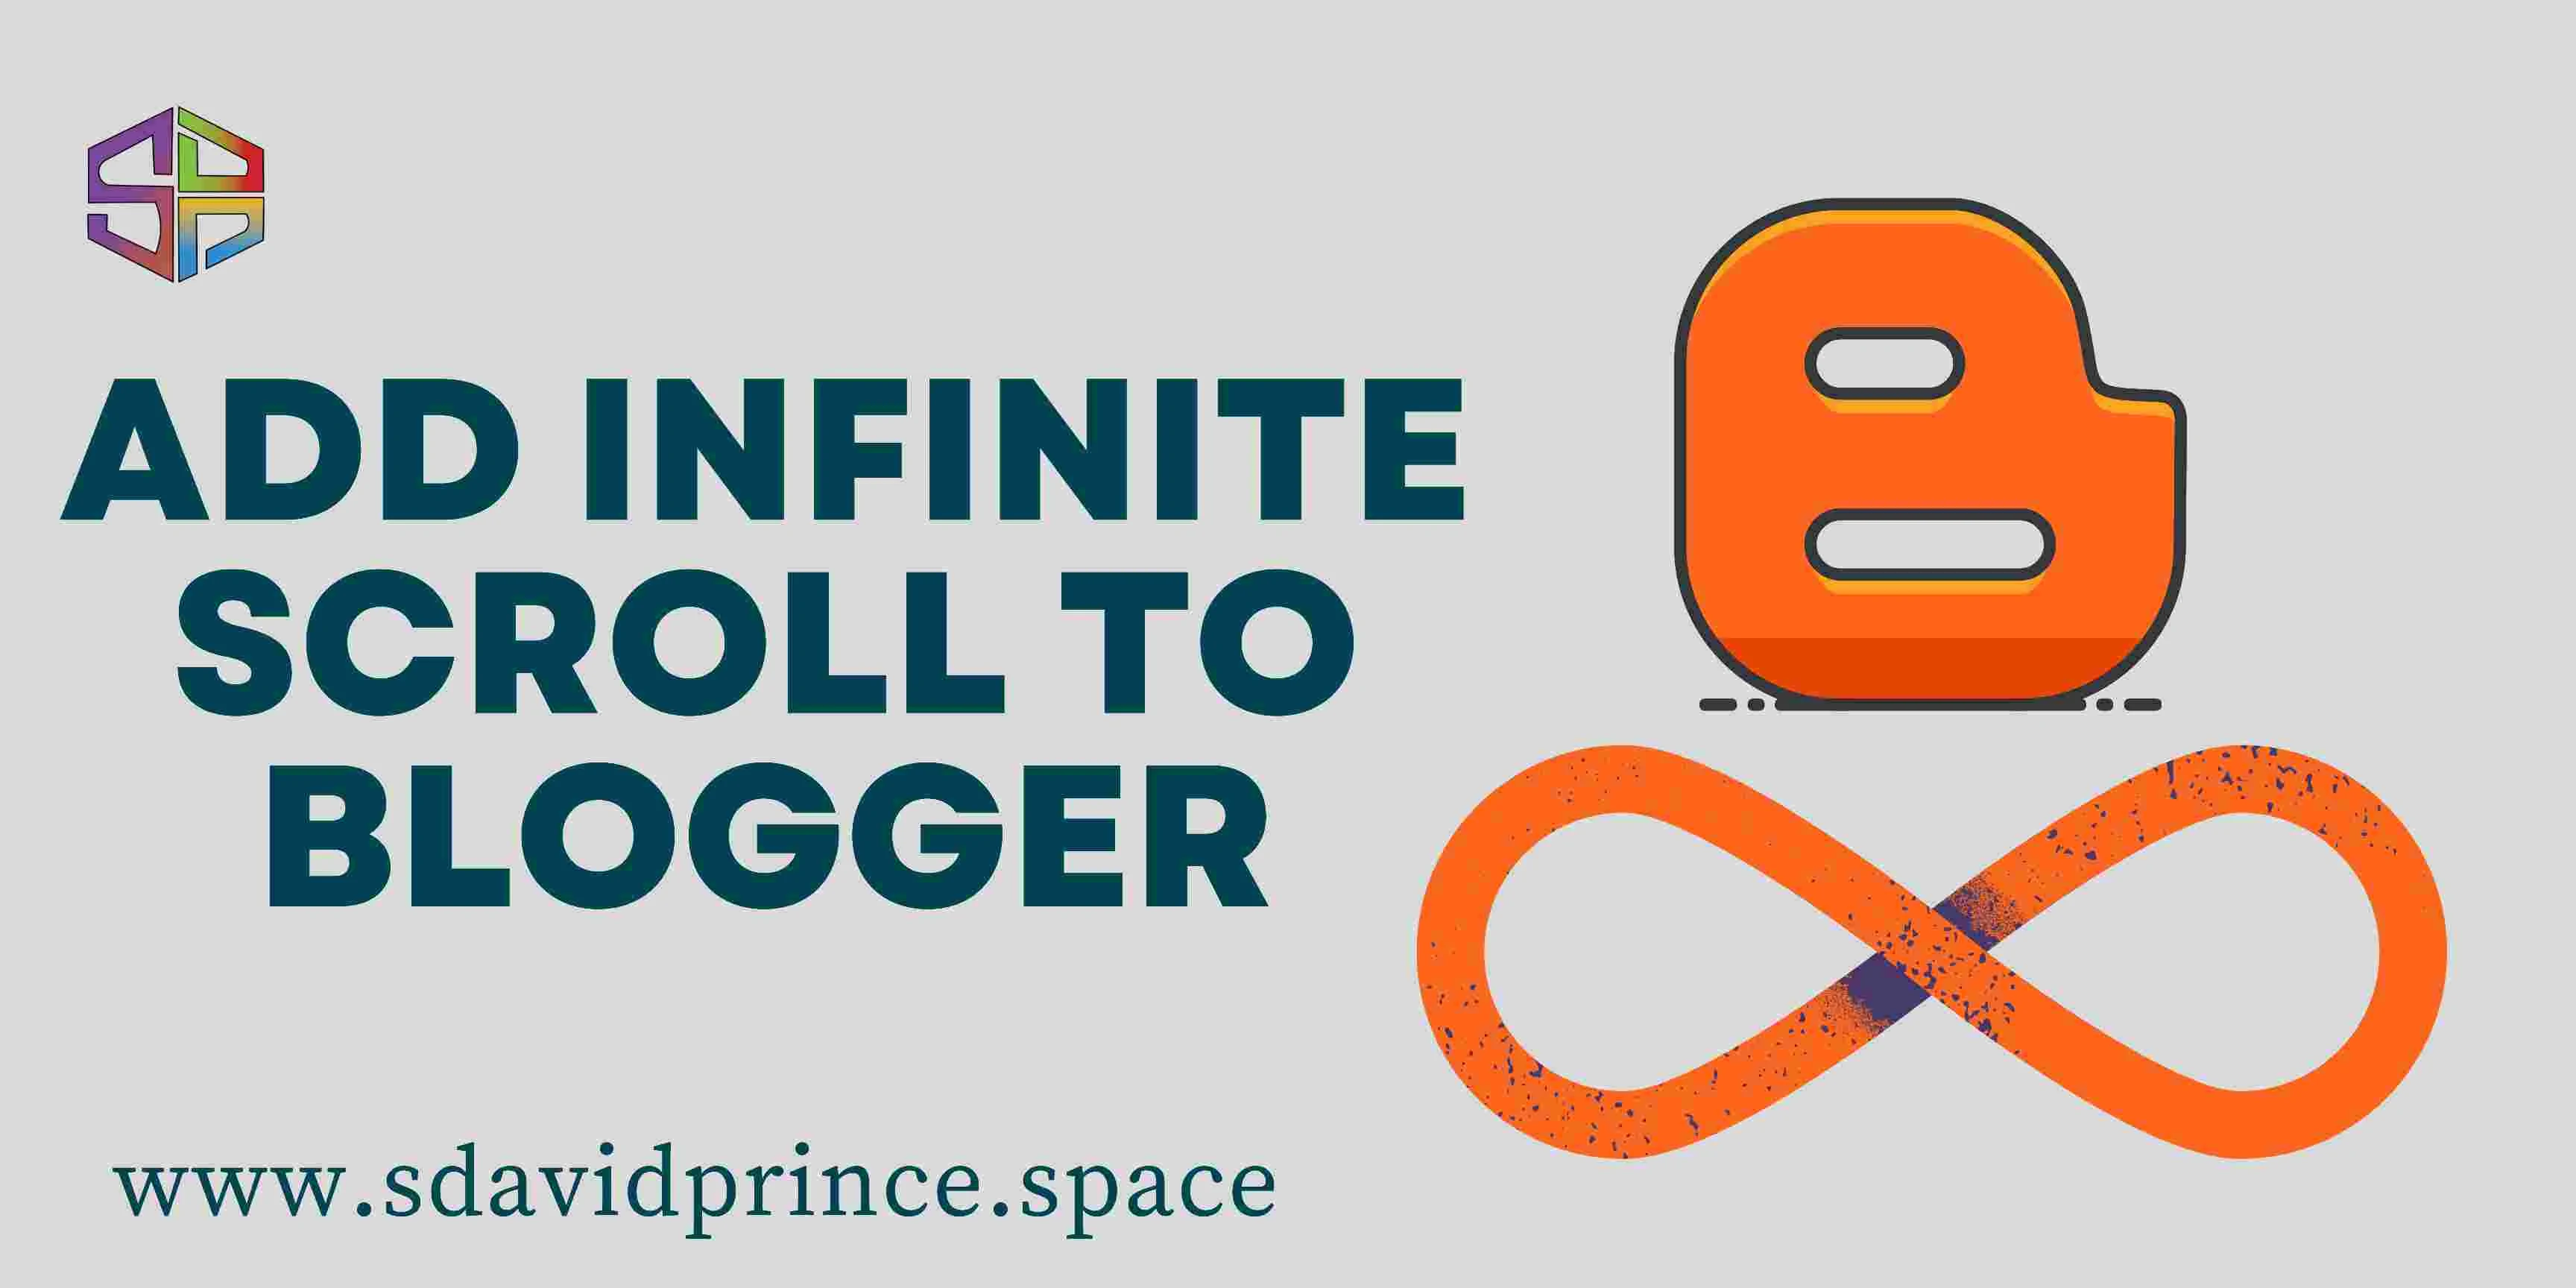 Blogger infinite scrolling